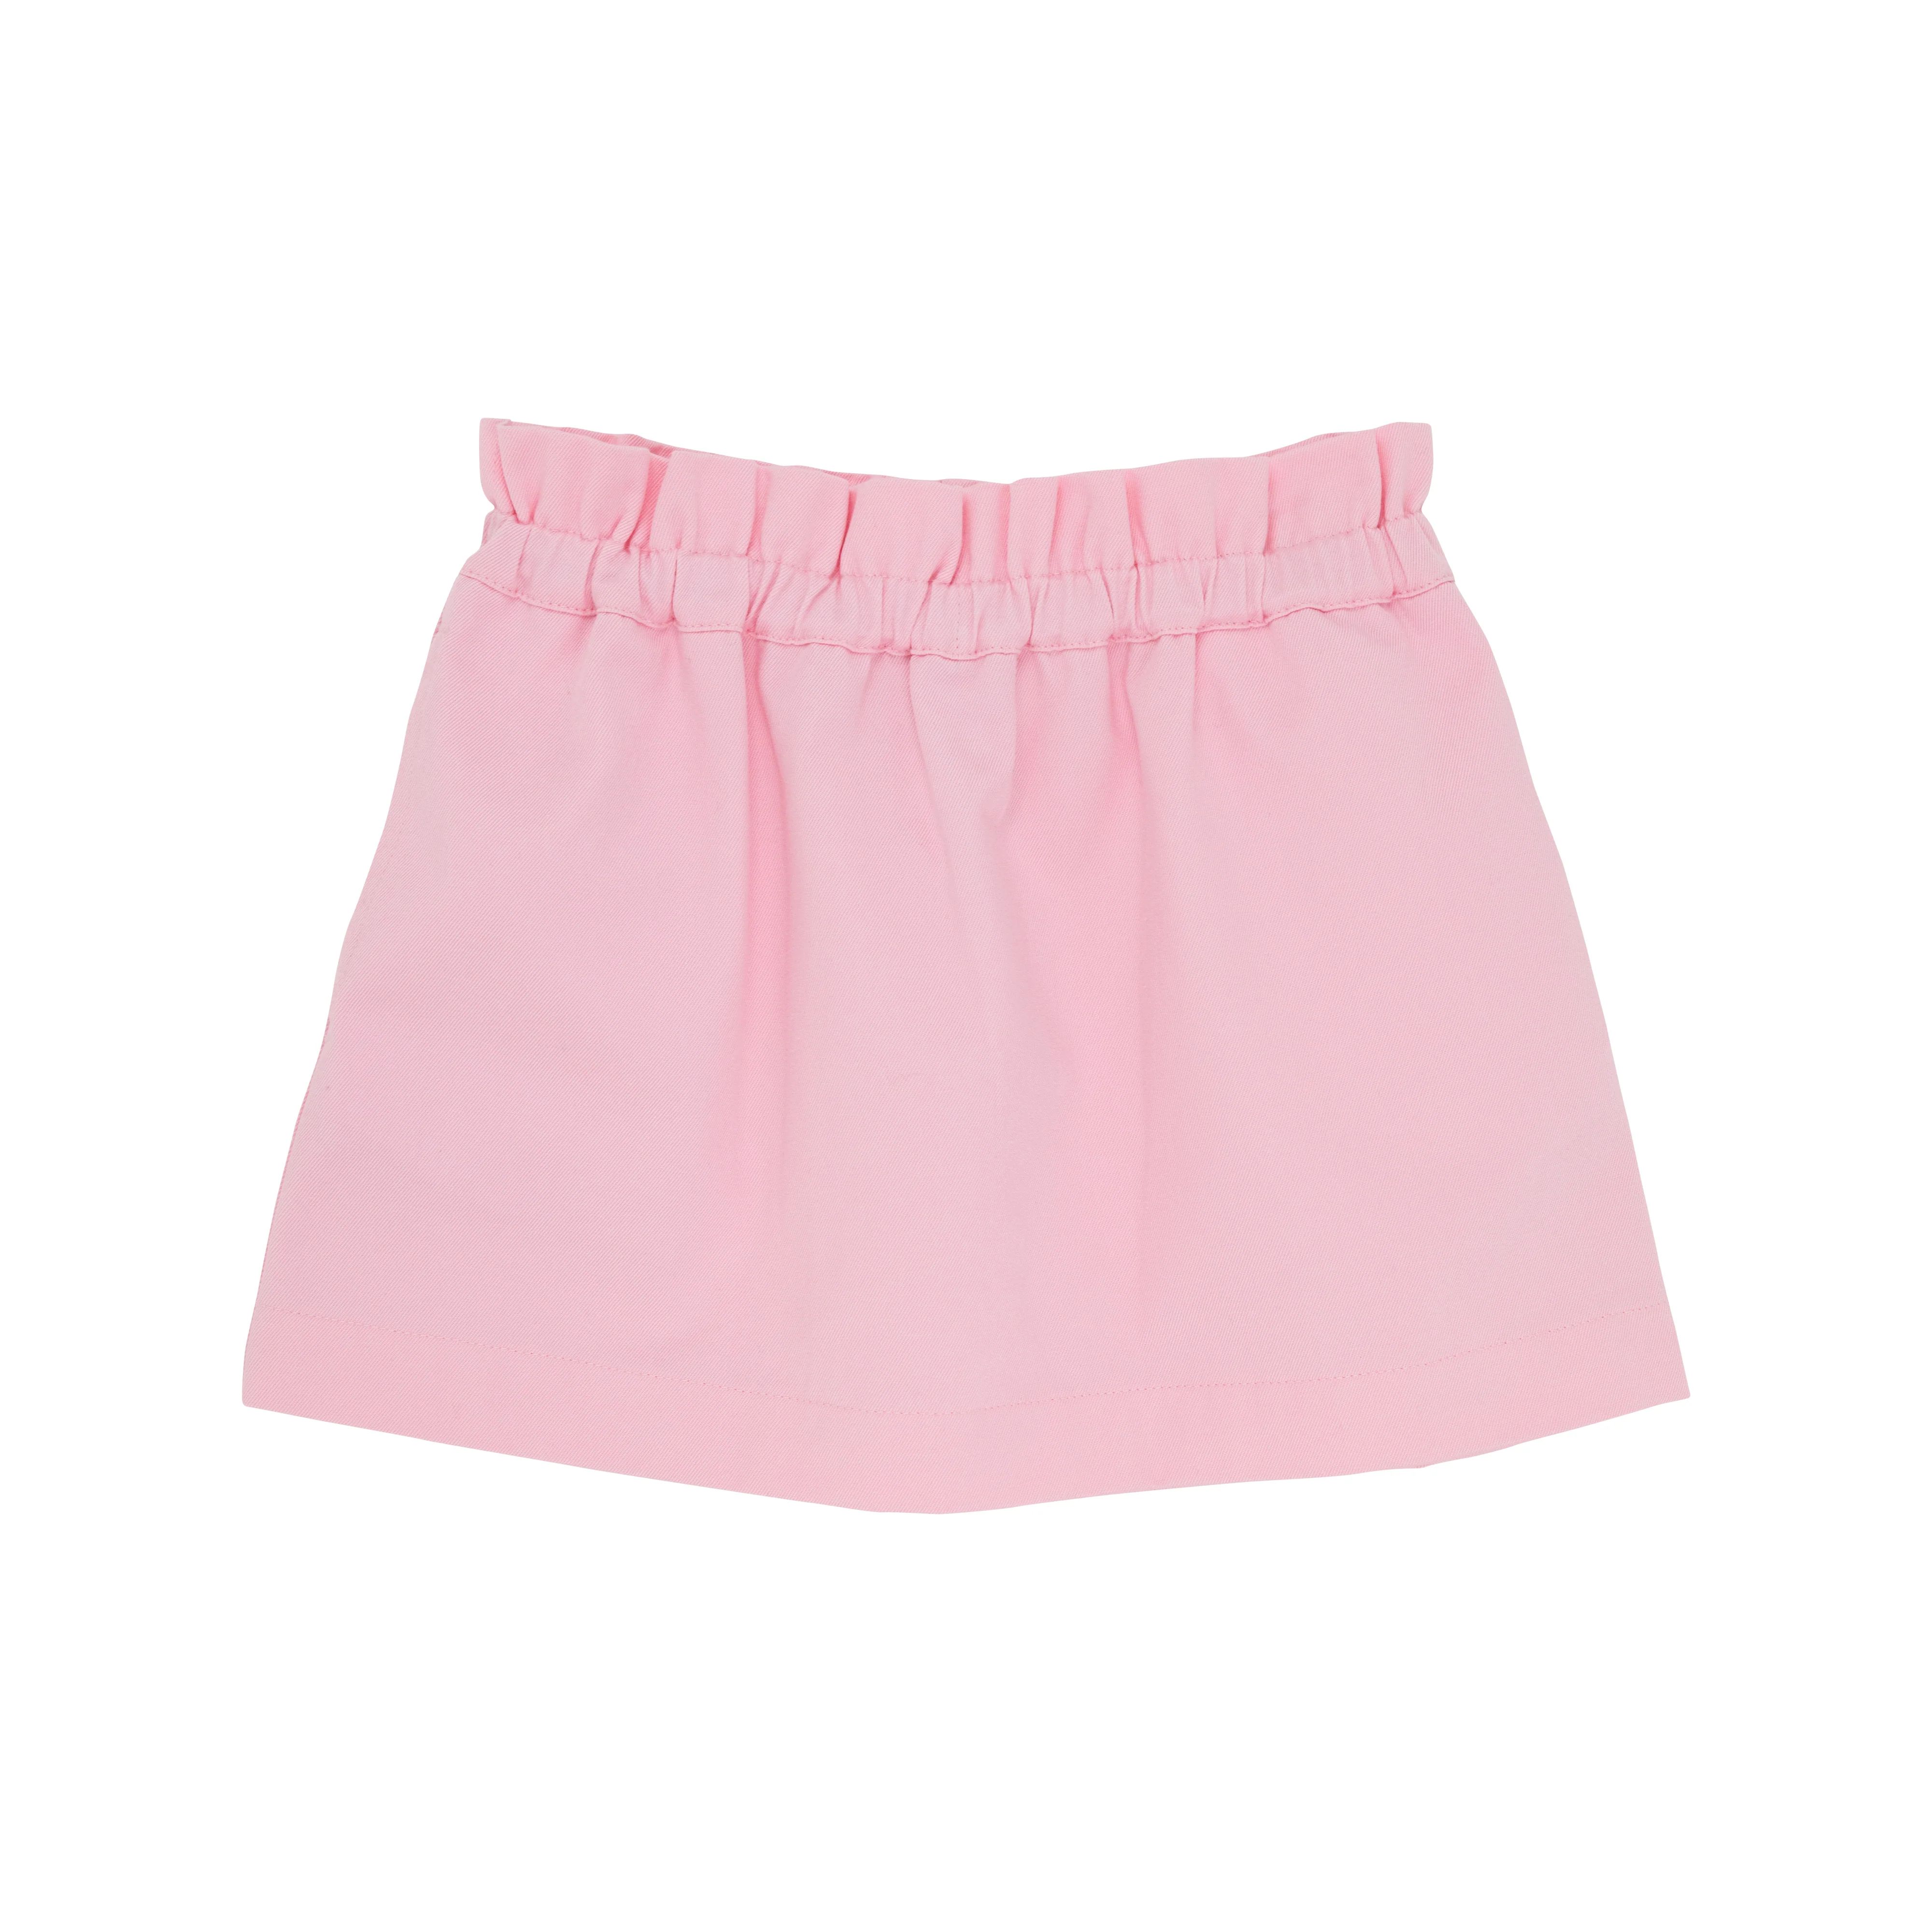 Beasley Bag Skirt - Pier Party Pink Twill | The Beaufort Bonnet Company